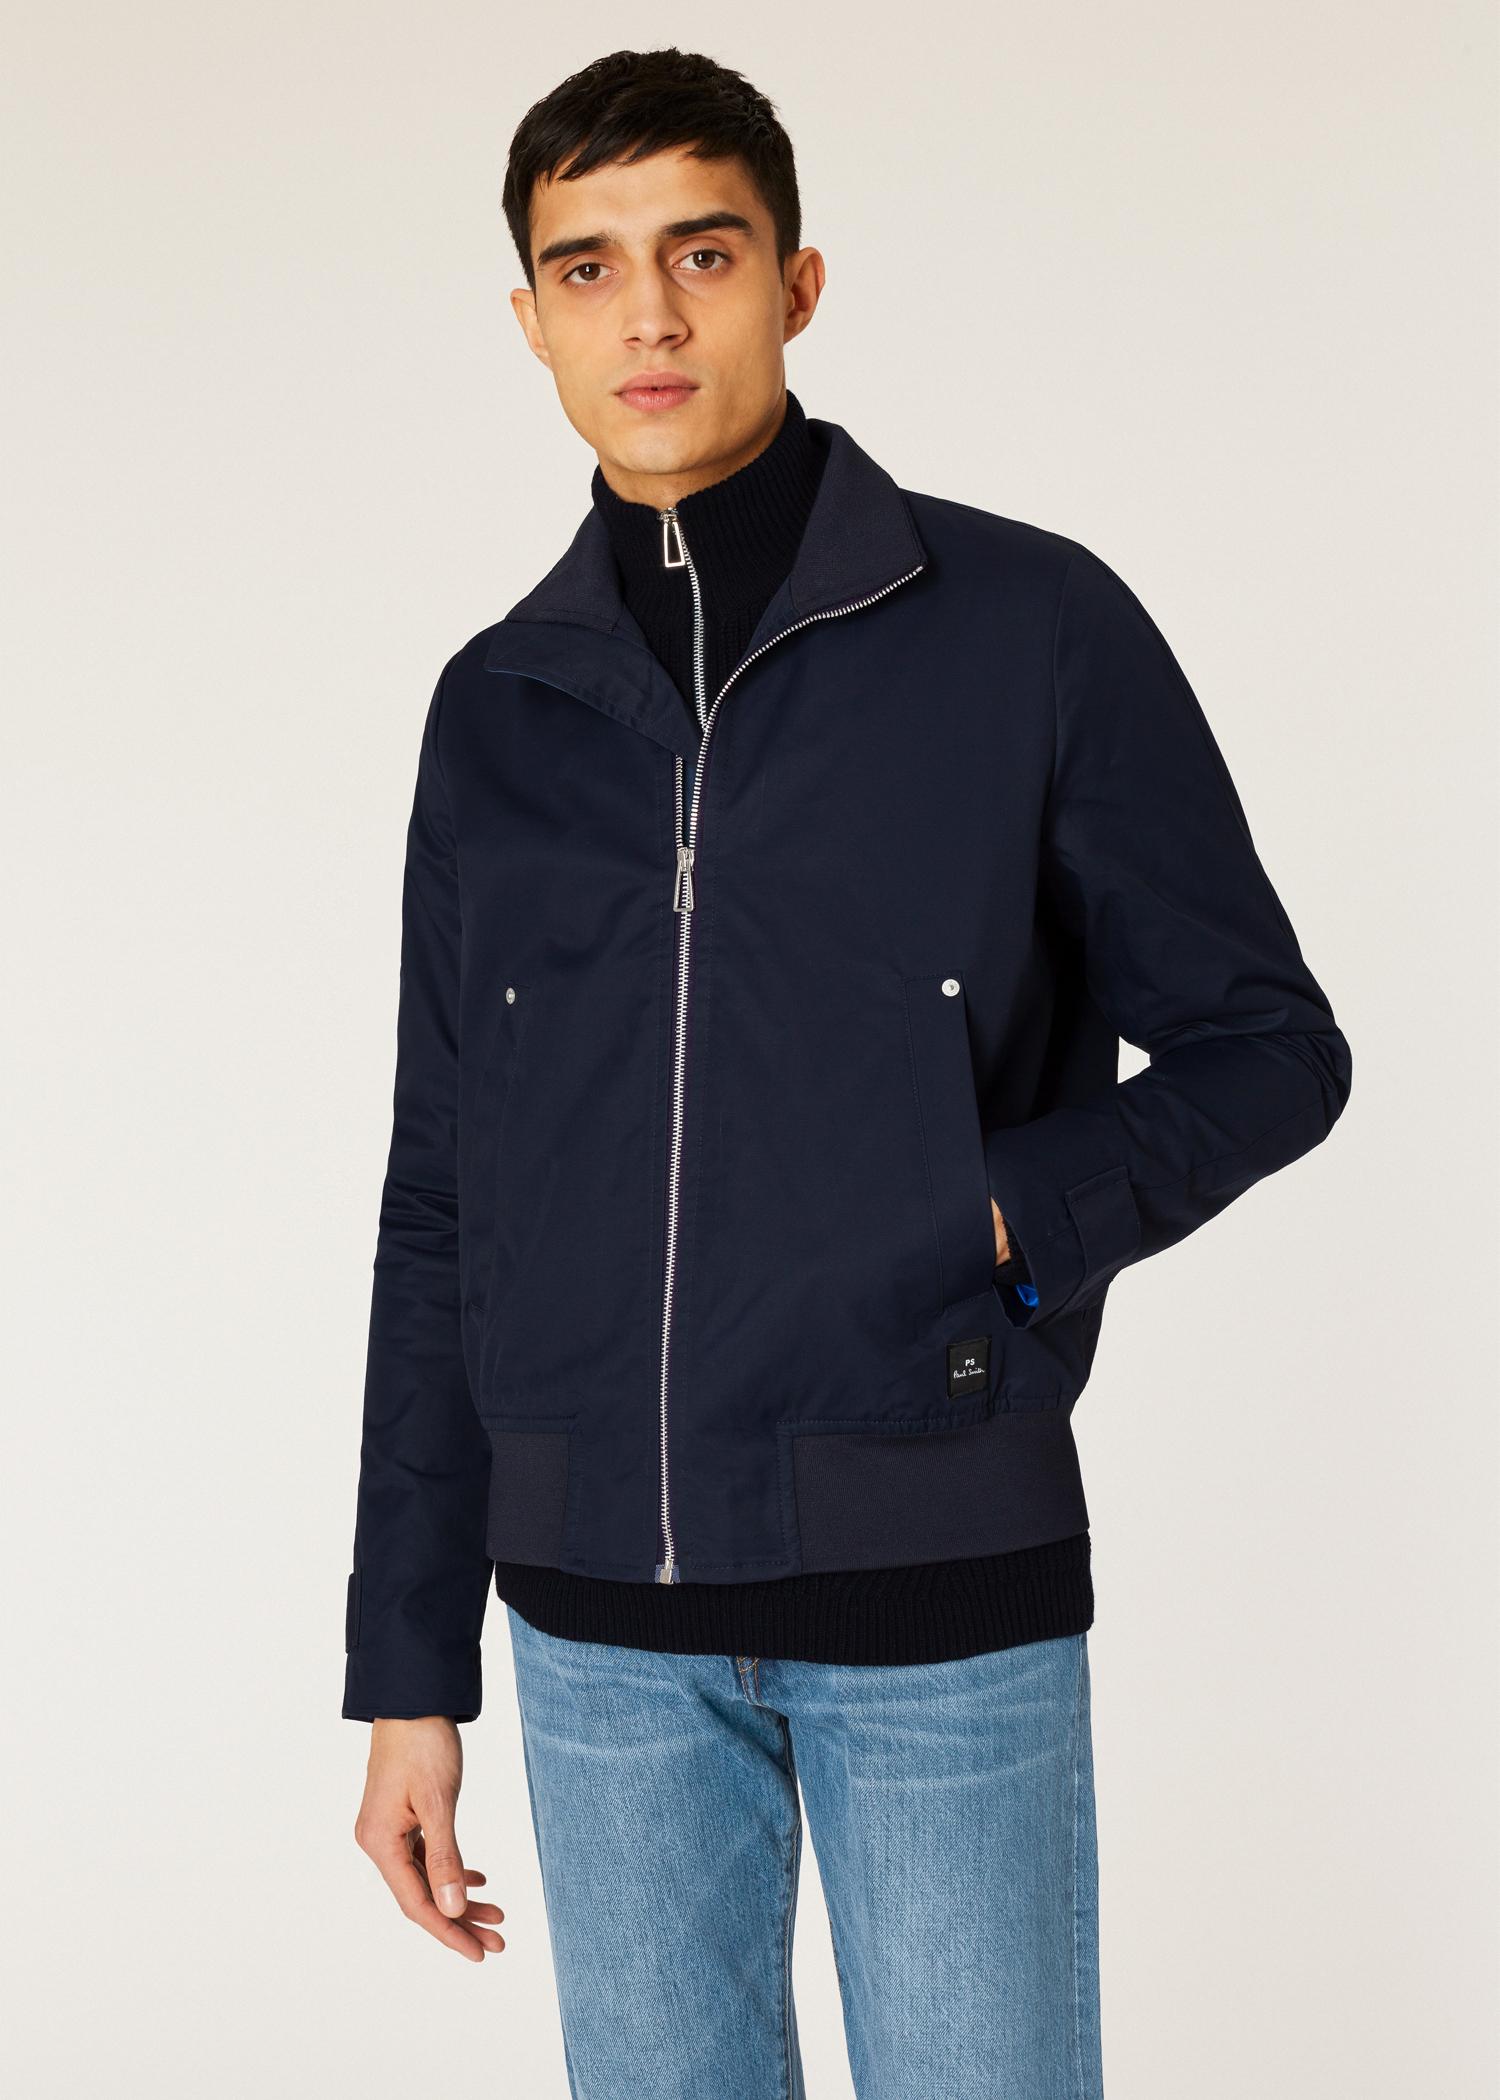 Paul Smith Navy Cotton-blend Harrington Jacket in Blue for Men - Lyst